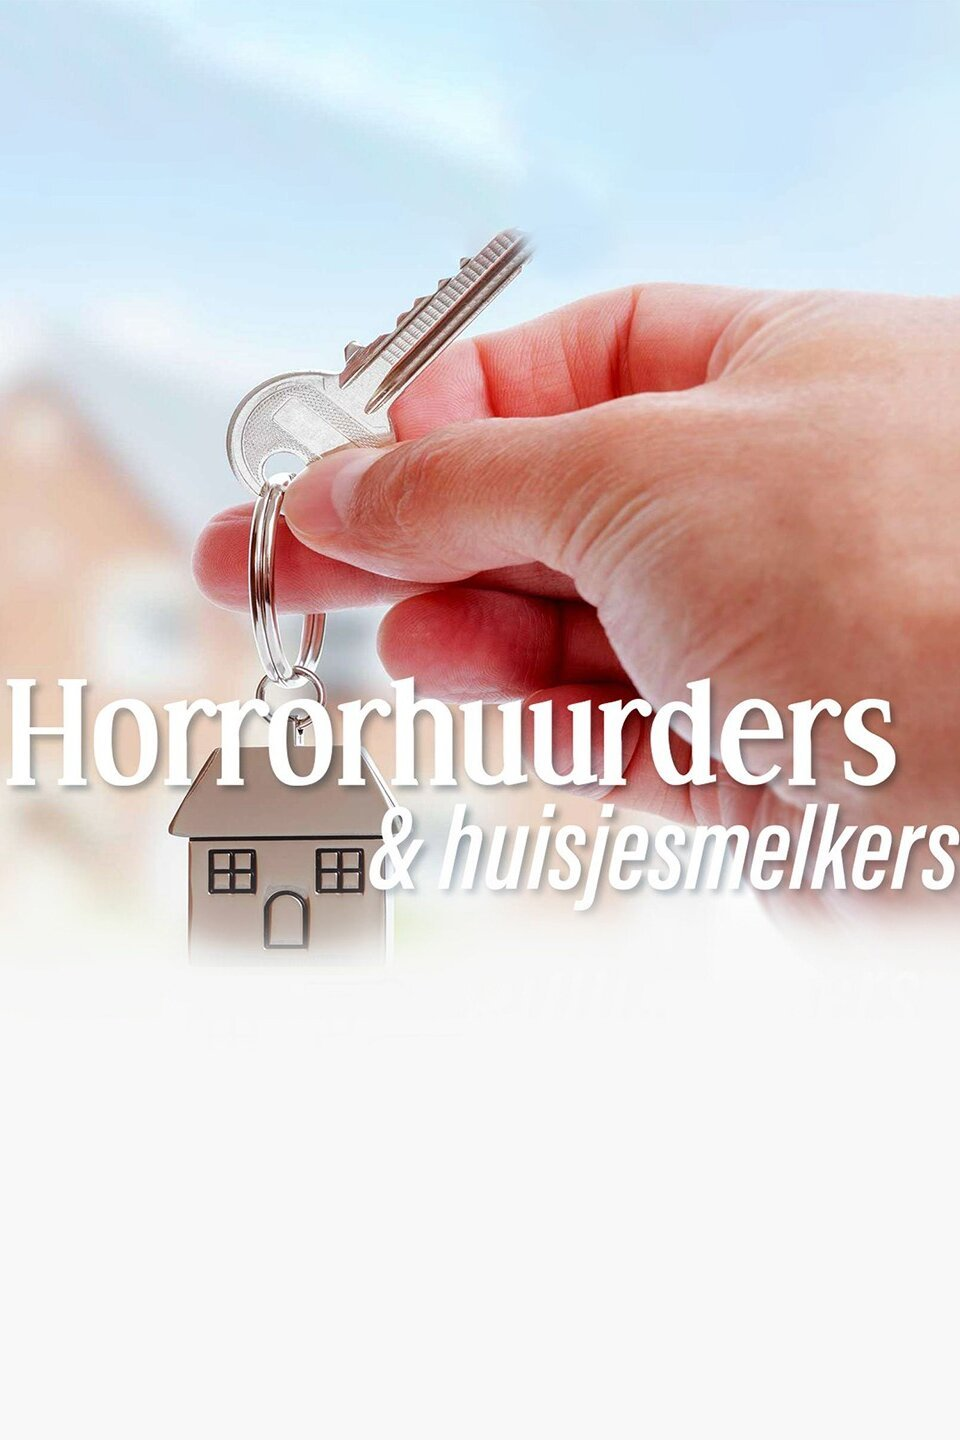 Horrorhuurders & Huisjesmelkers